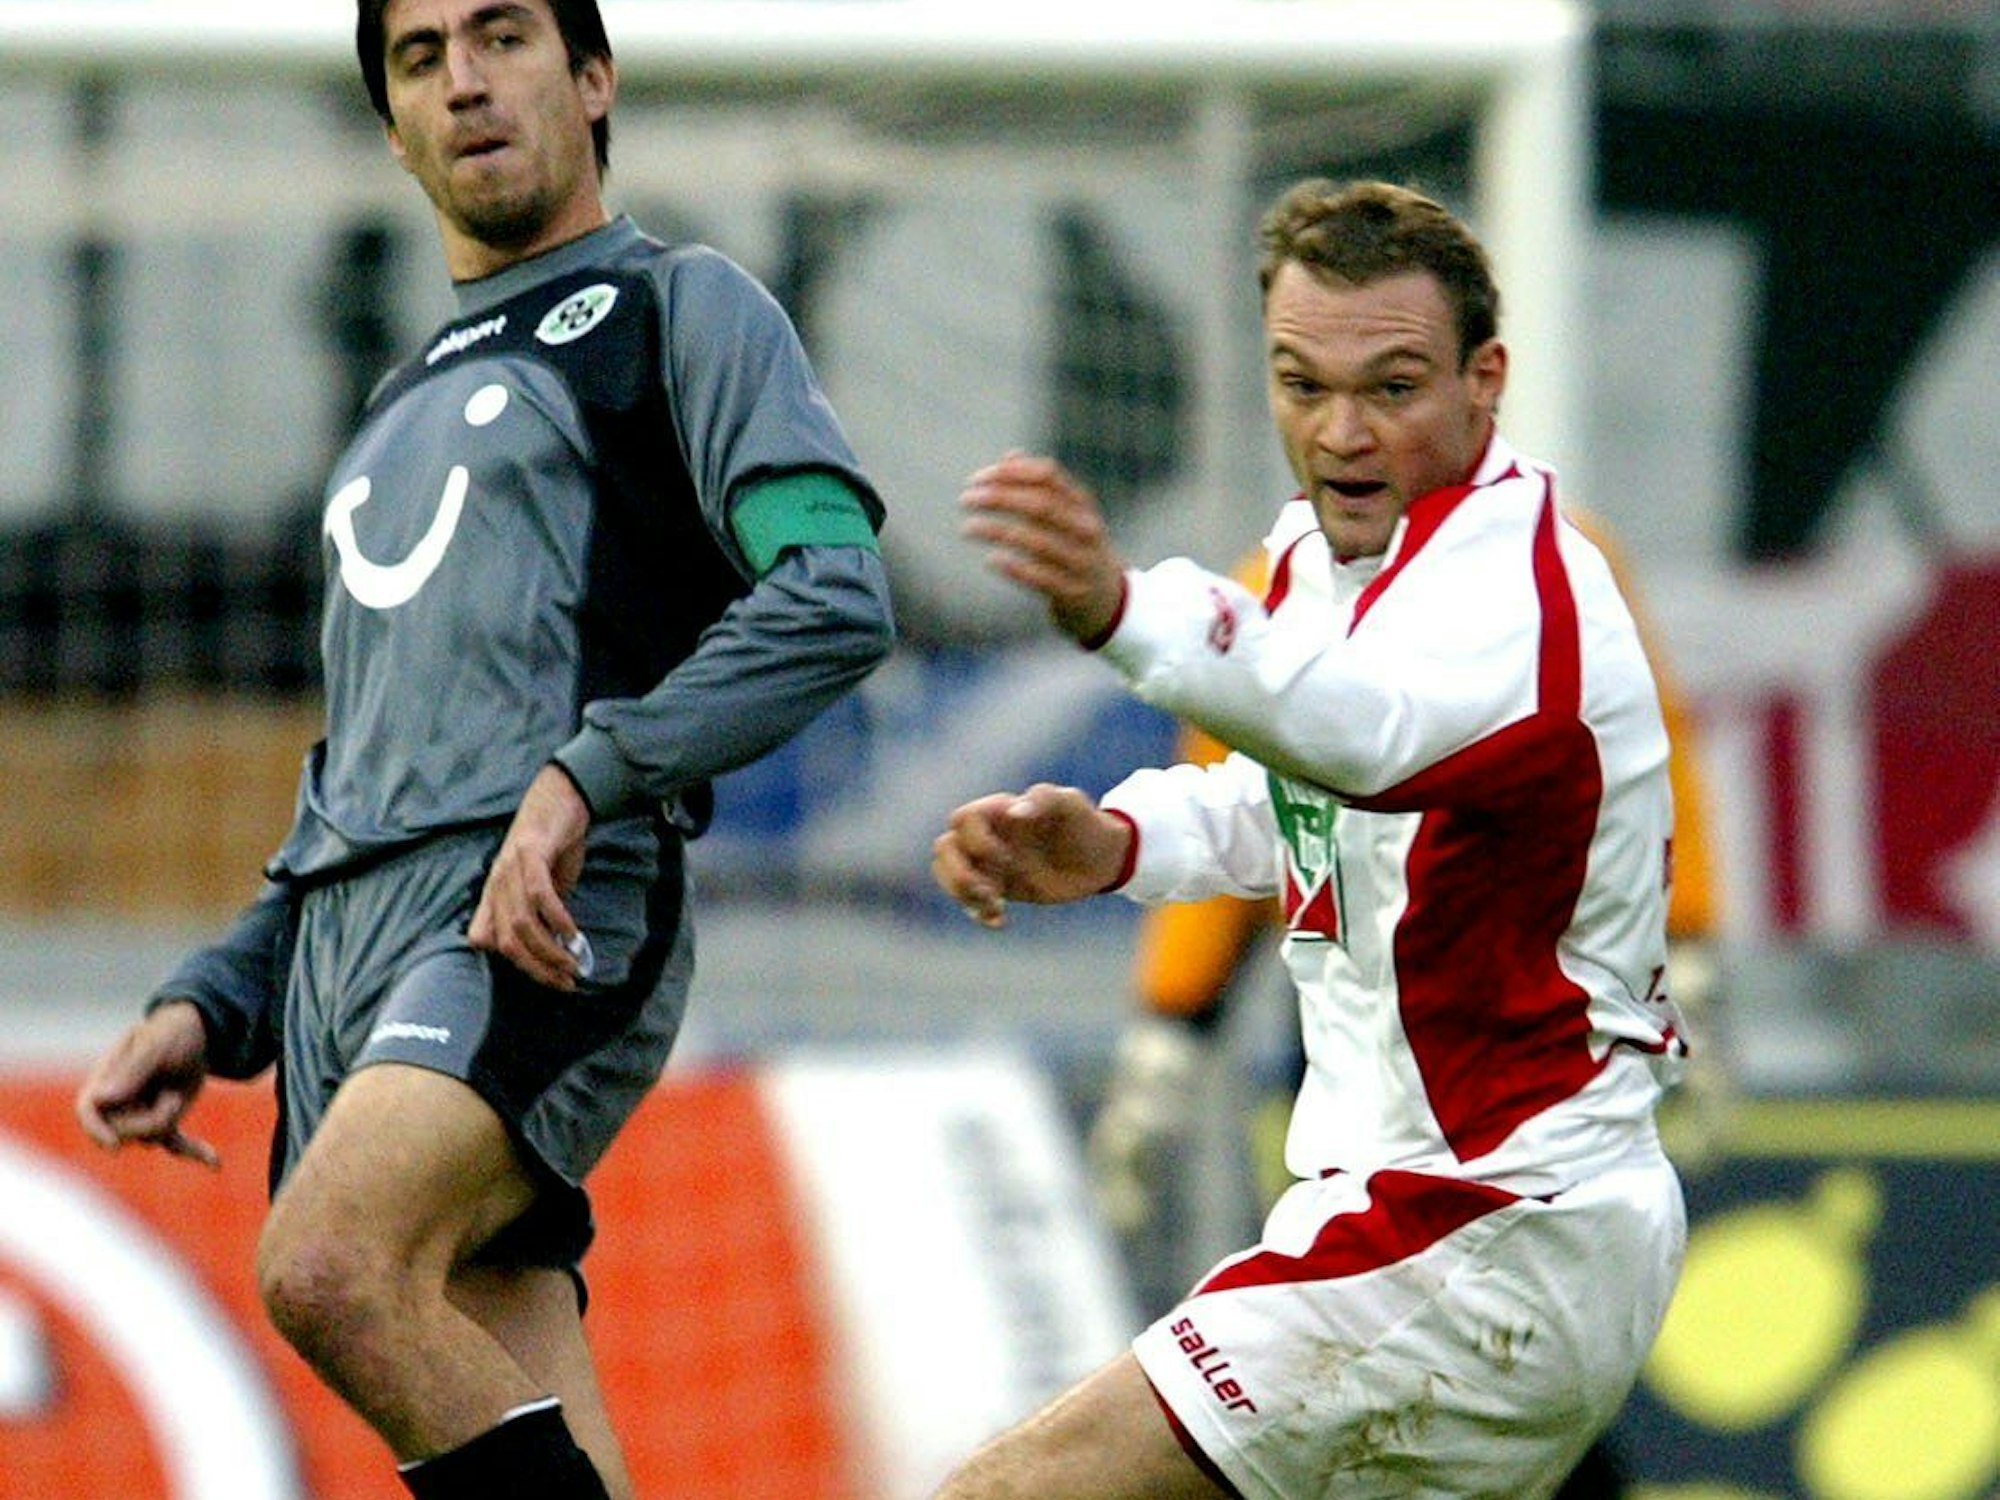 Der Kölner Alexander Voigt (r.) kämpft mit dem Hannoveraner Kostas Konstantinidis um den Ball (2003).